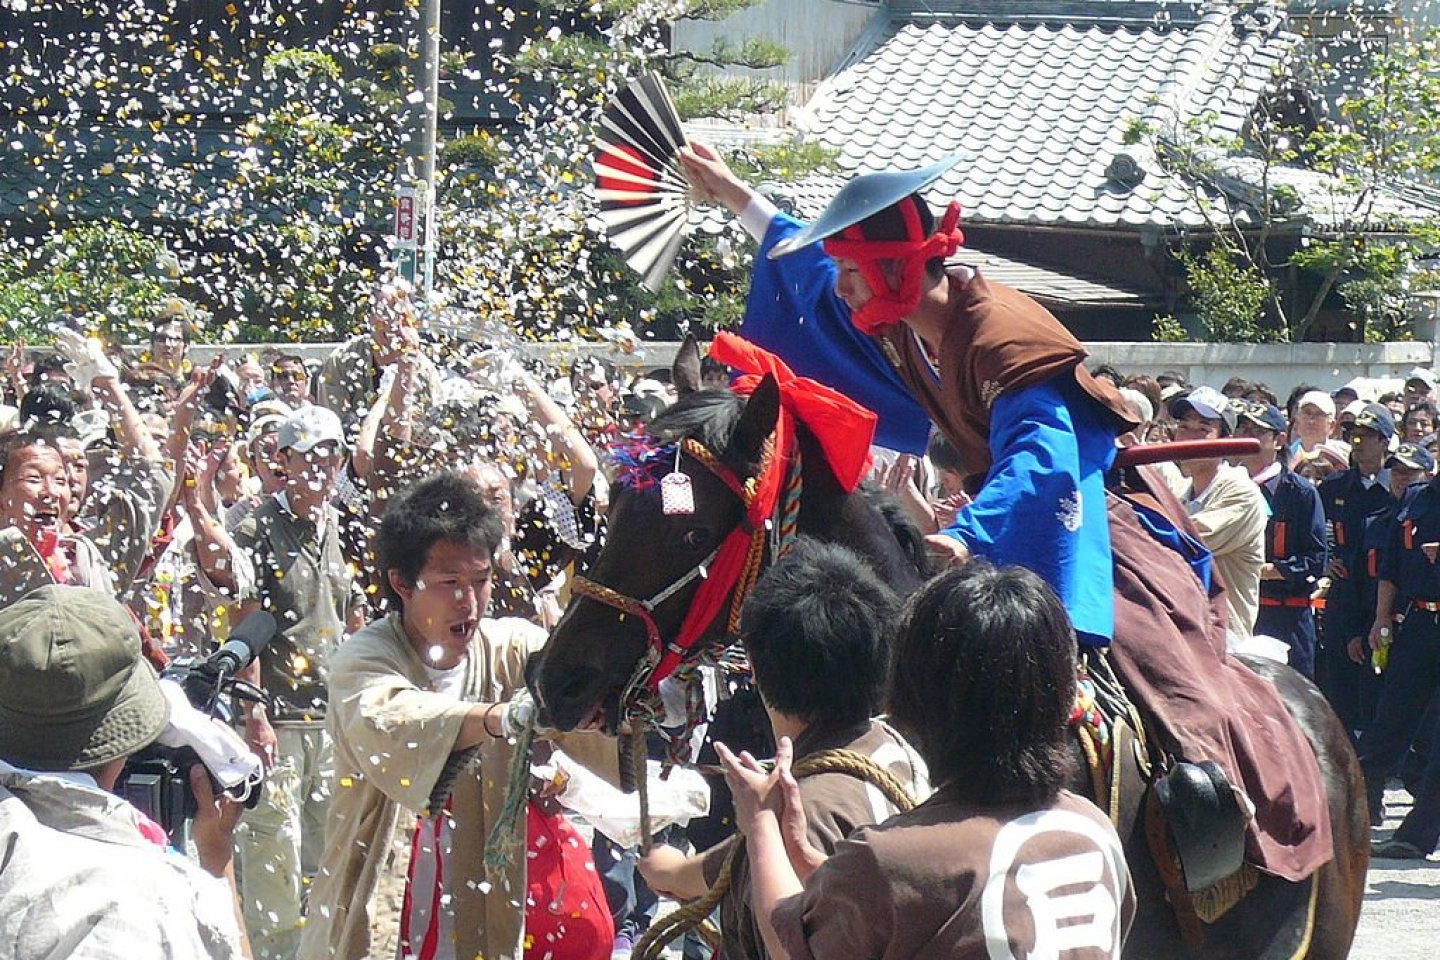 Tado Ageuma: Horse Jumping Festival